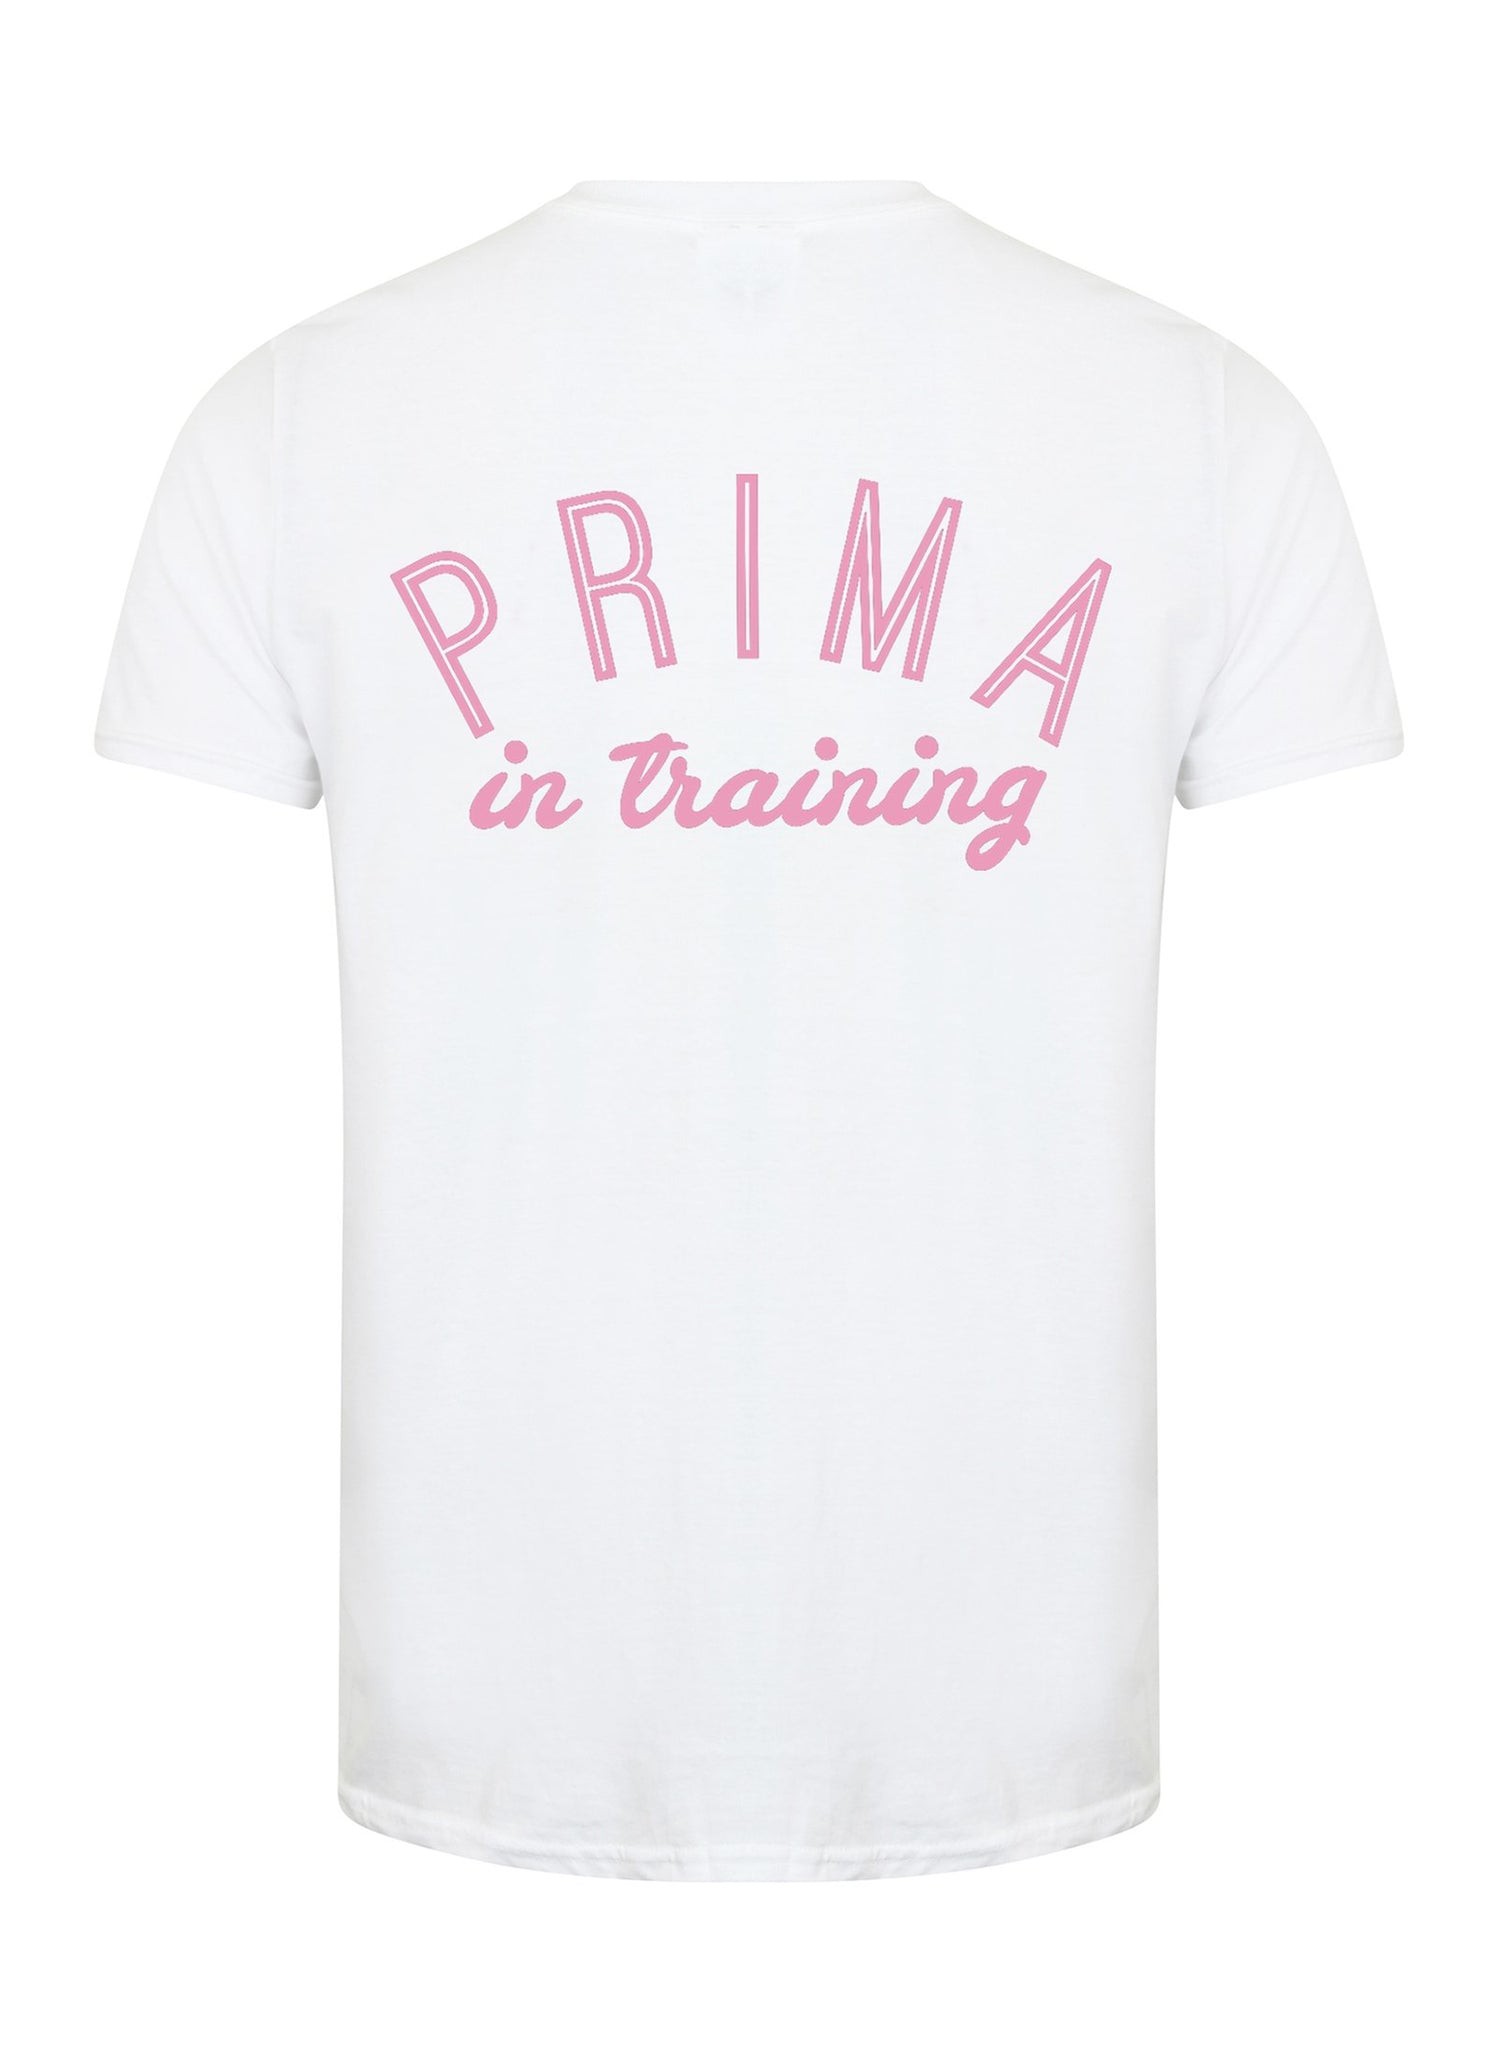 Prima In Training - Unisex Fit T-Shirt - Kelham Print x Mama.Does.B